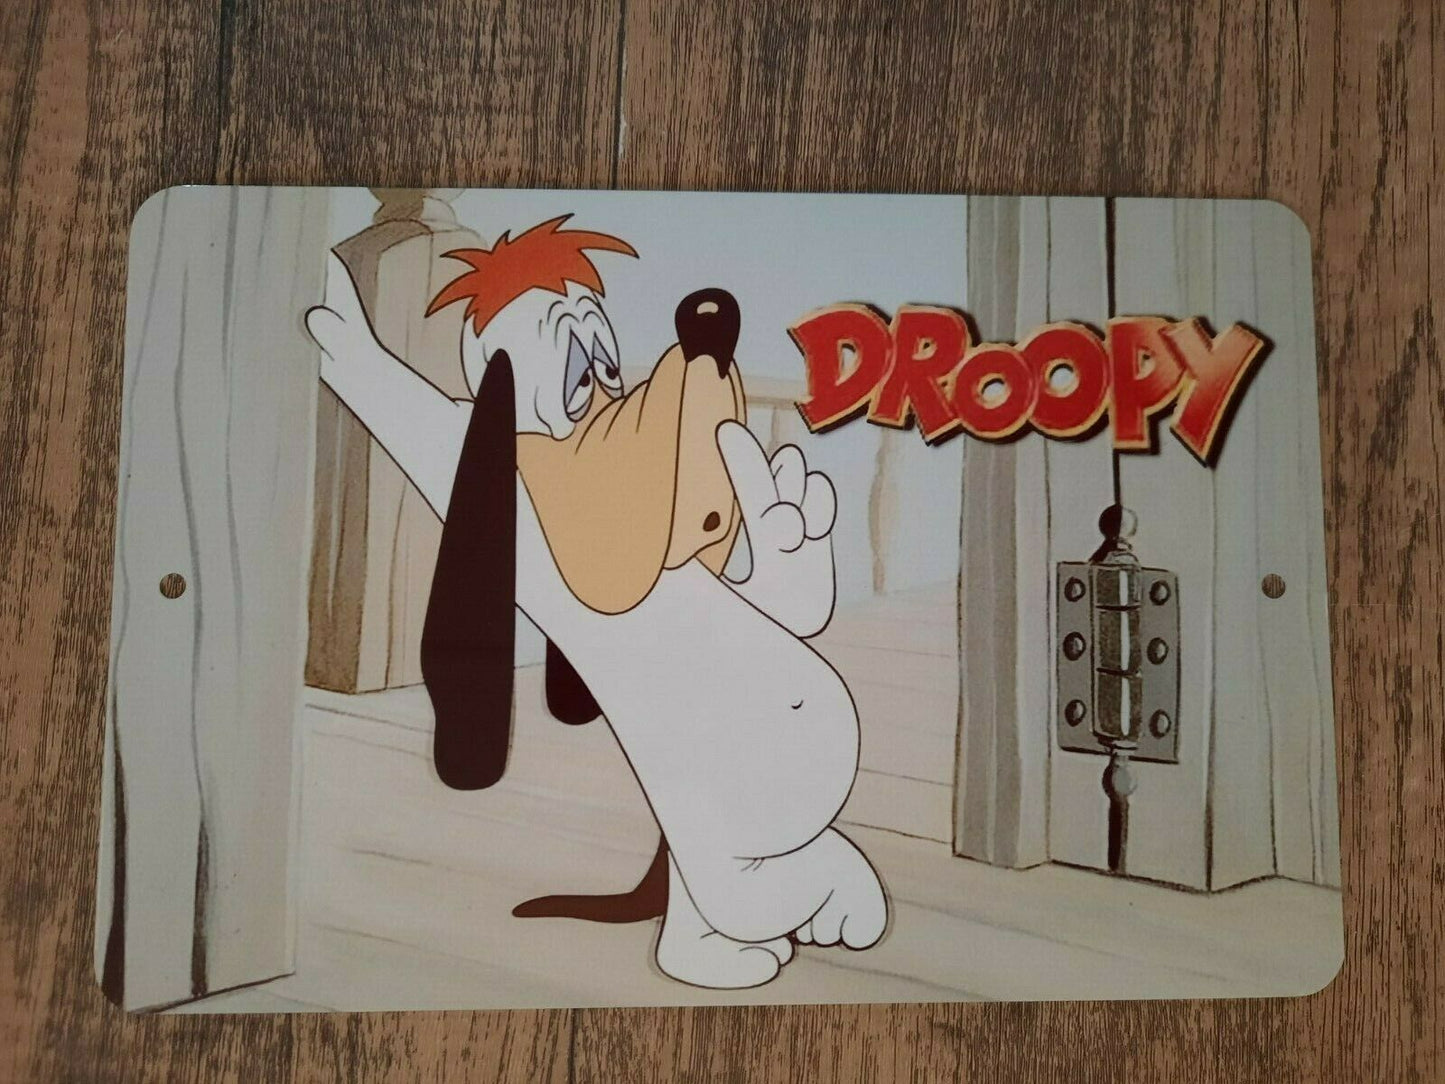 Droopy Dog Hanna Barbera Classic Cartoon 8x12 Metal Wall Sign